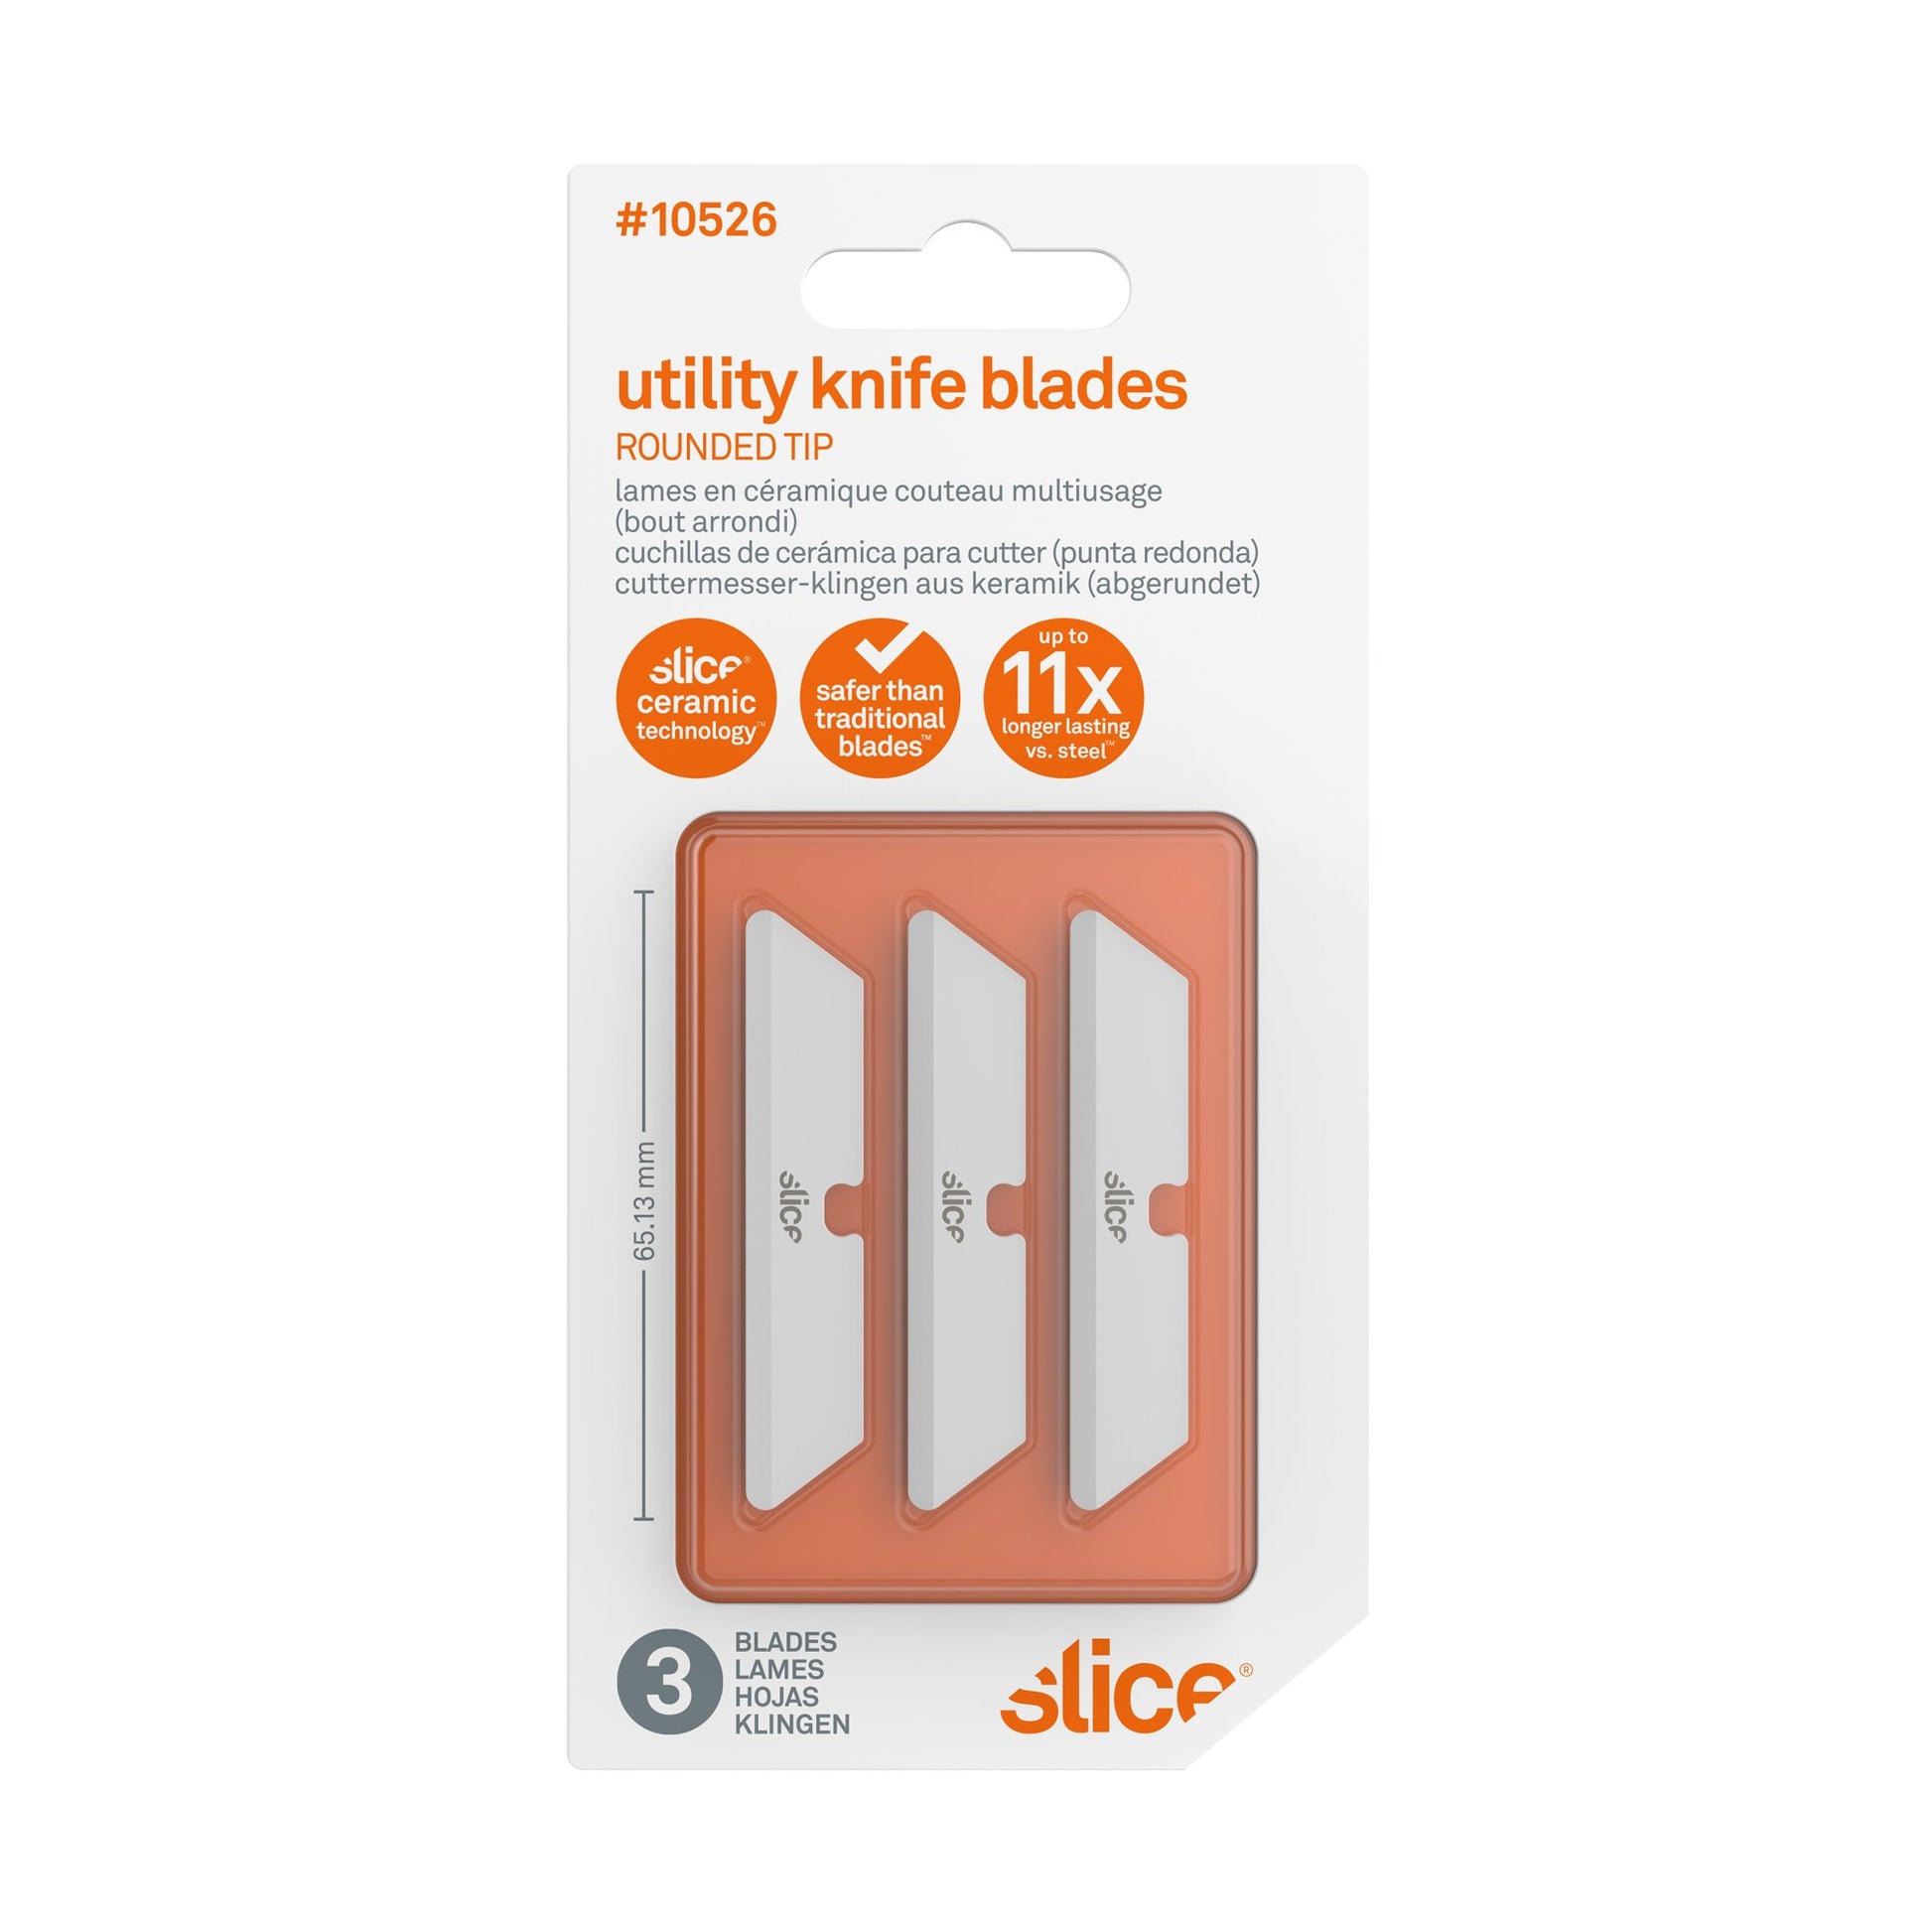 Slice Ceramic Box Cutter Replacement Blades (SC-8901)